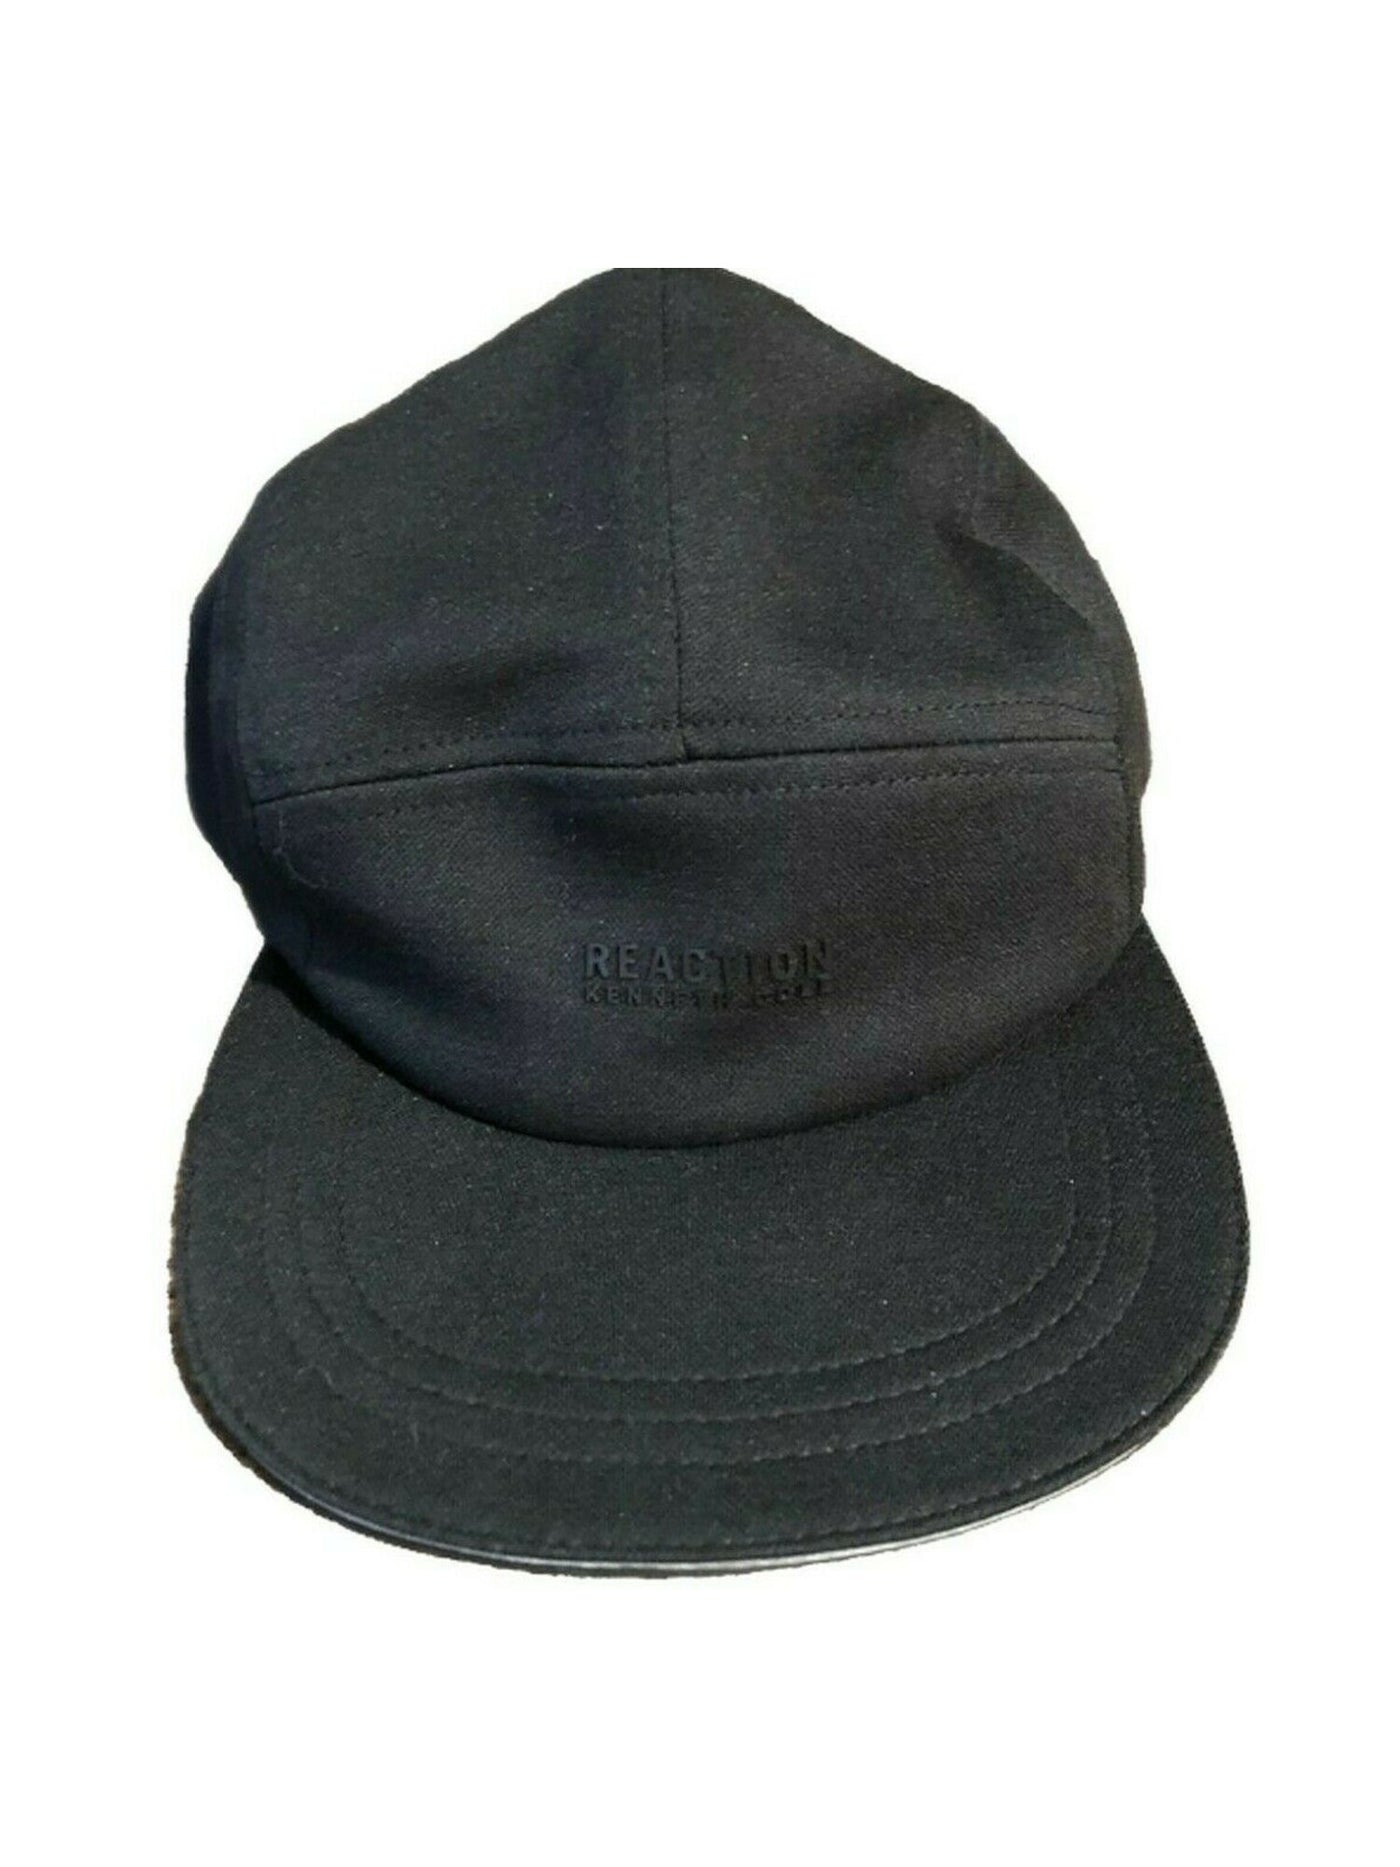 REACTION Mens Black Logo Solid Polyester Strapback Baseball Ball Cap Hat FREE SIZE